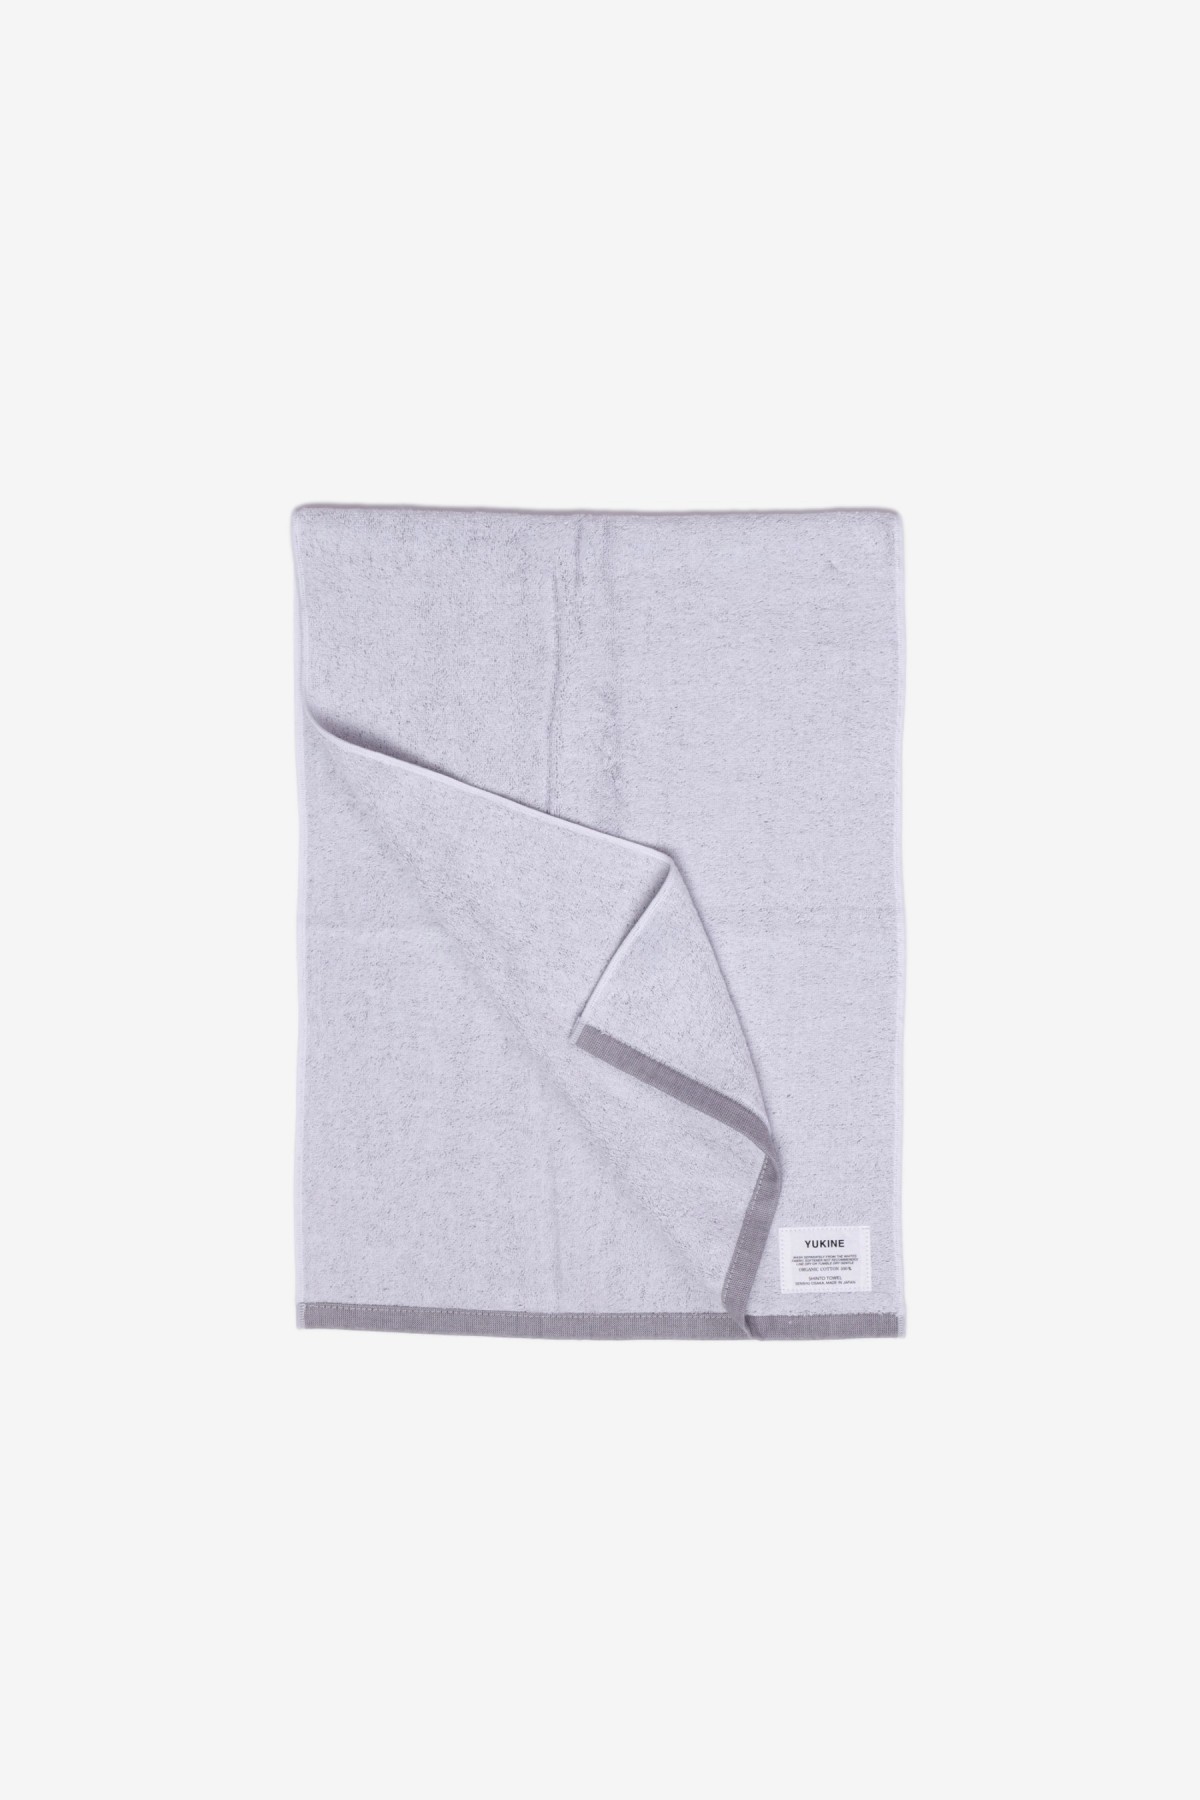 Shinto Yukine Mini Bath Towel Hai in Grey